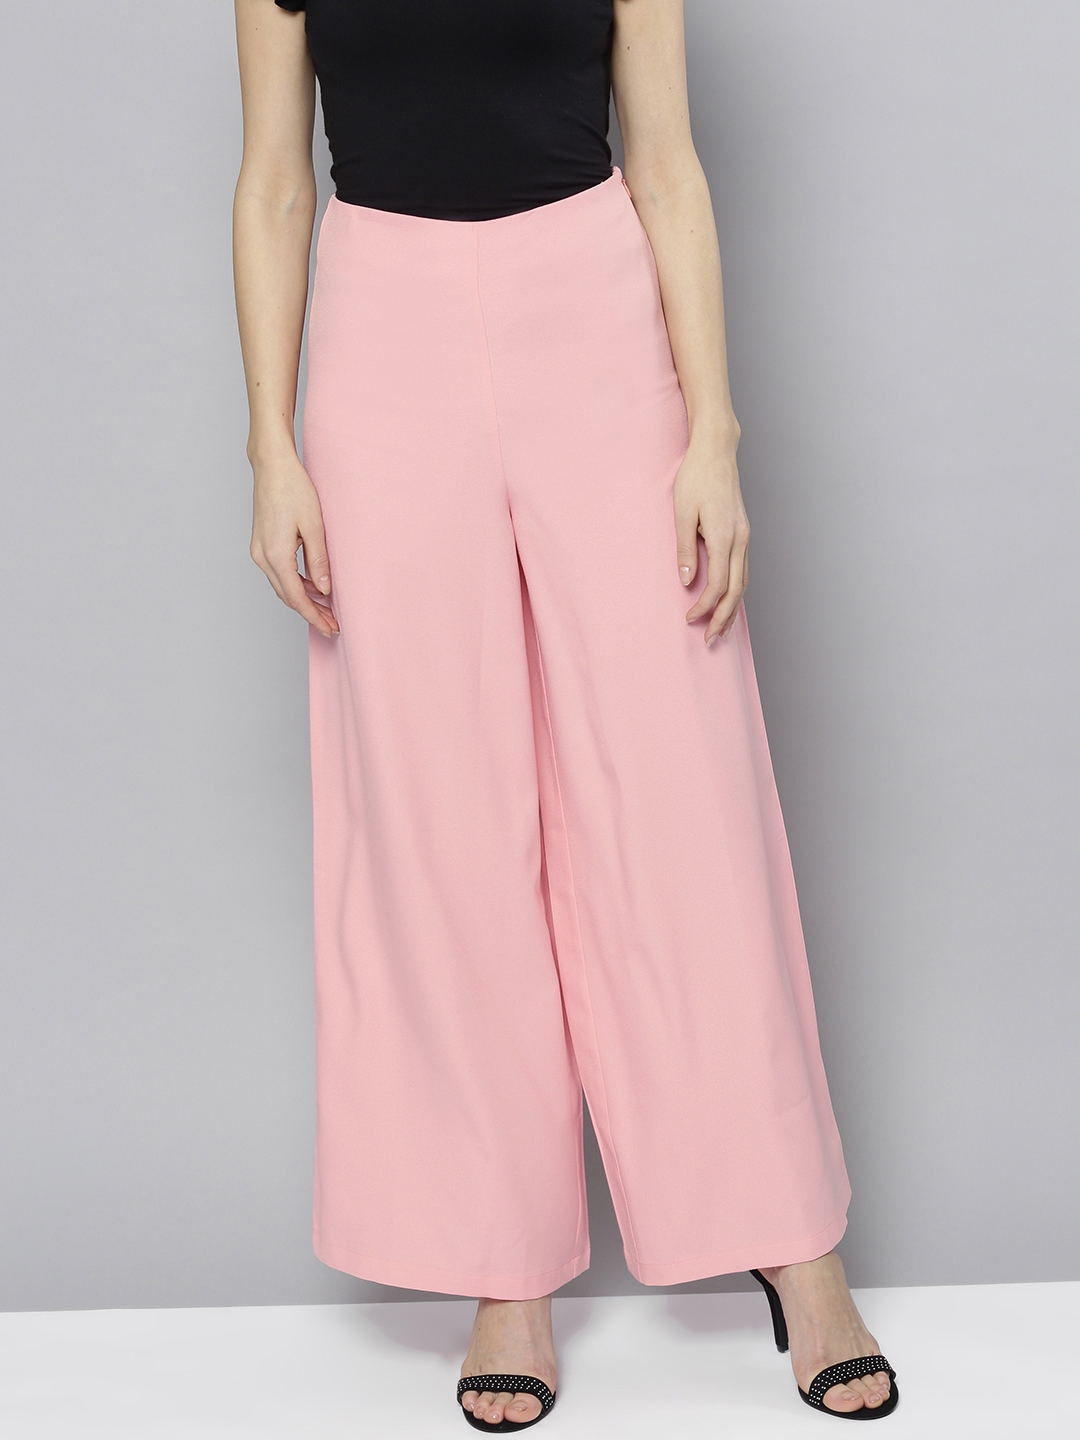 Pink Pants - Buy Pink Pants Online Starting at Just ₹140